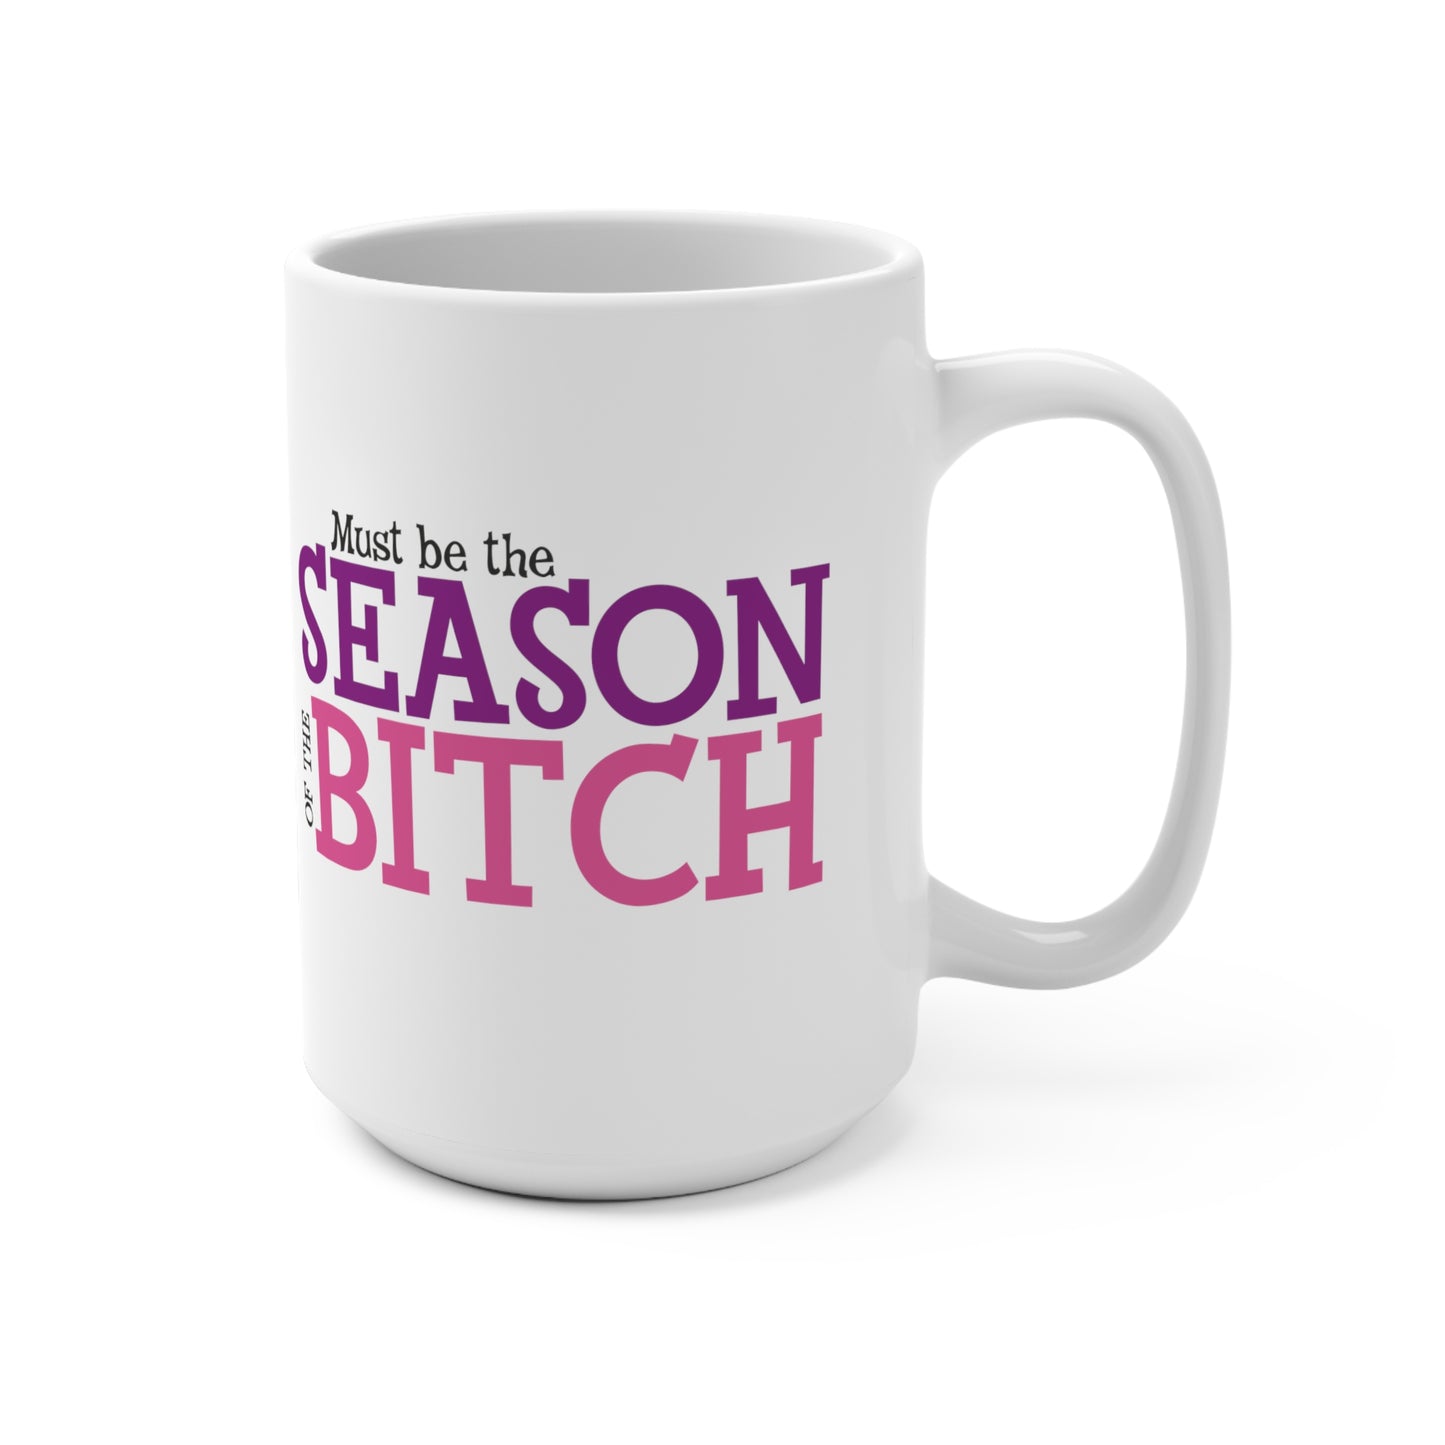 Must be the Season of the Bitch Mug 15oz White